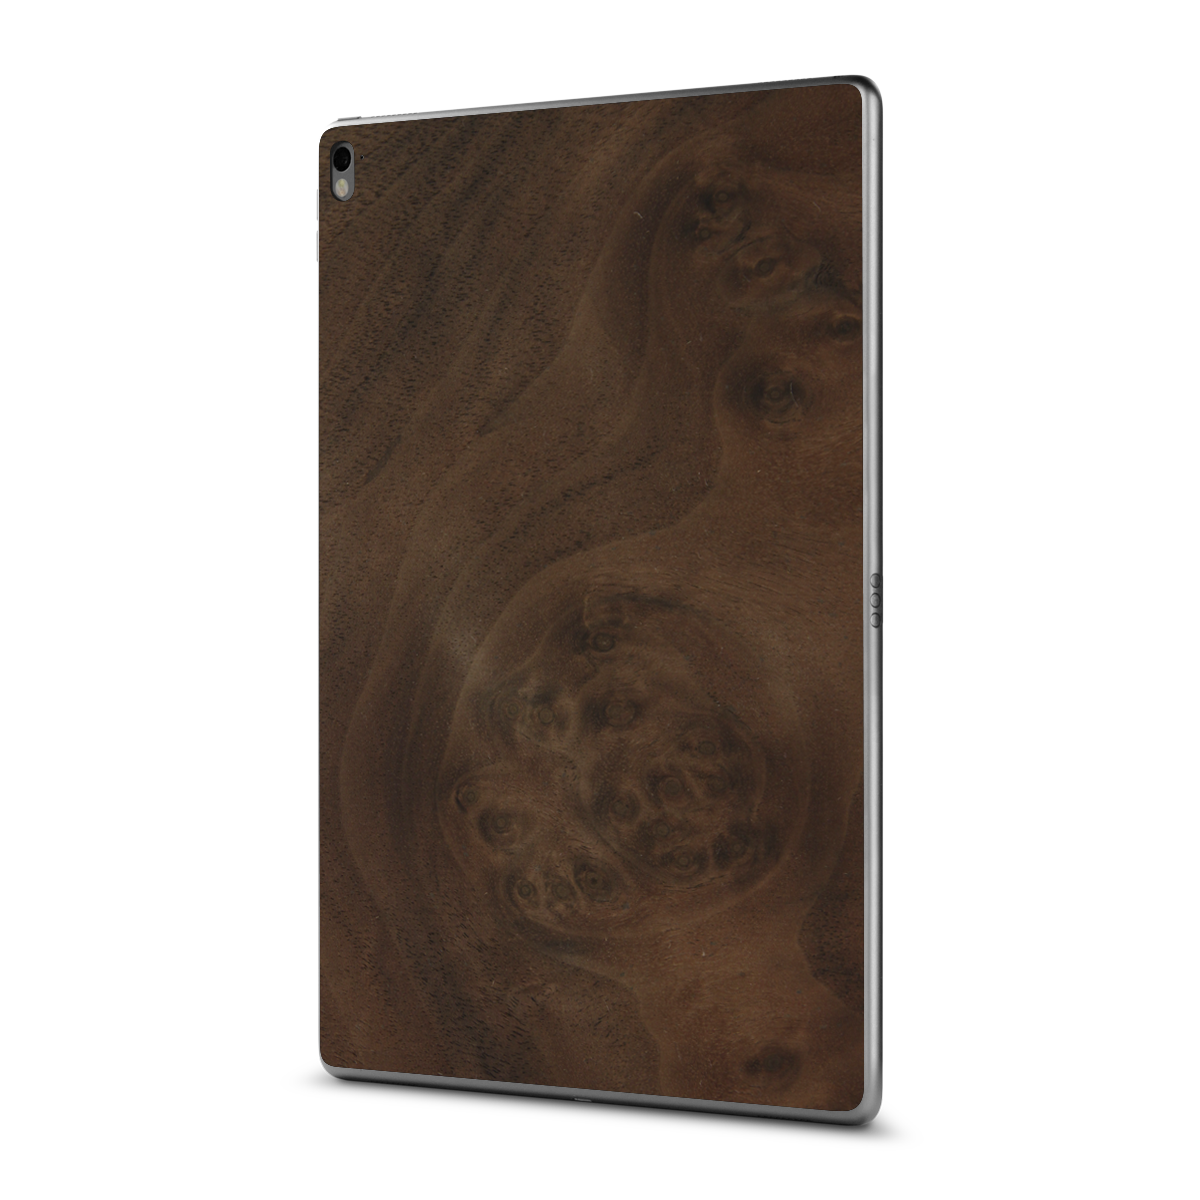 iPad Pro 9.7-inch — #WoodBack Skin